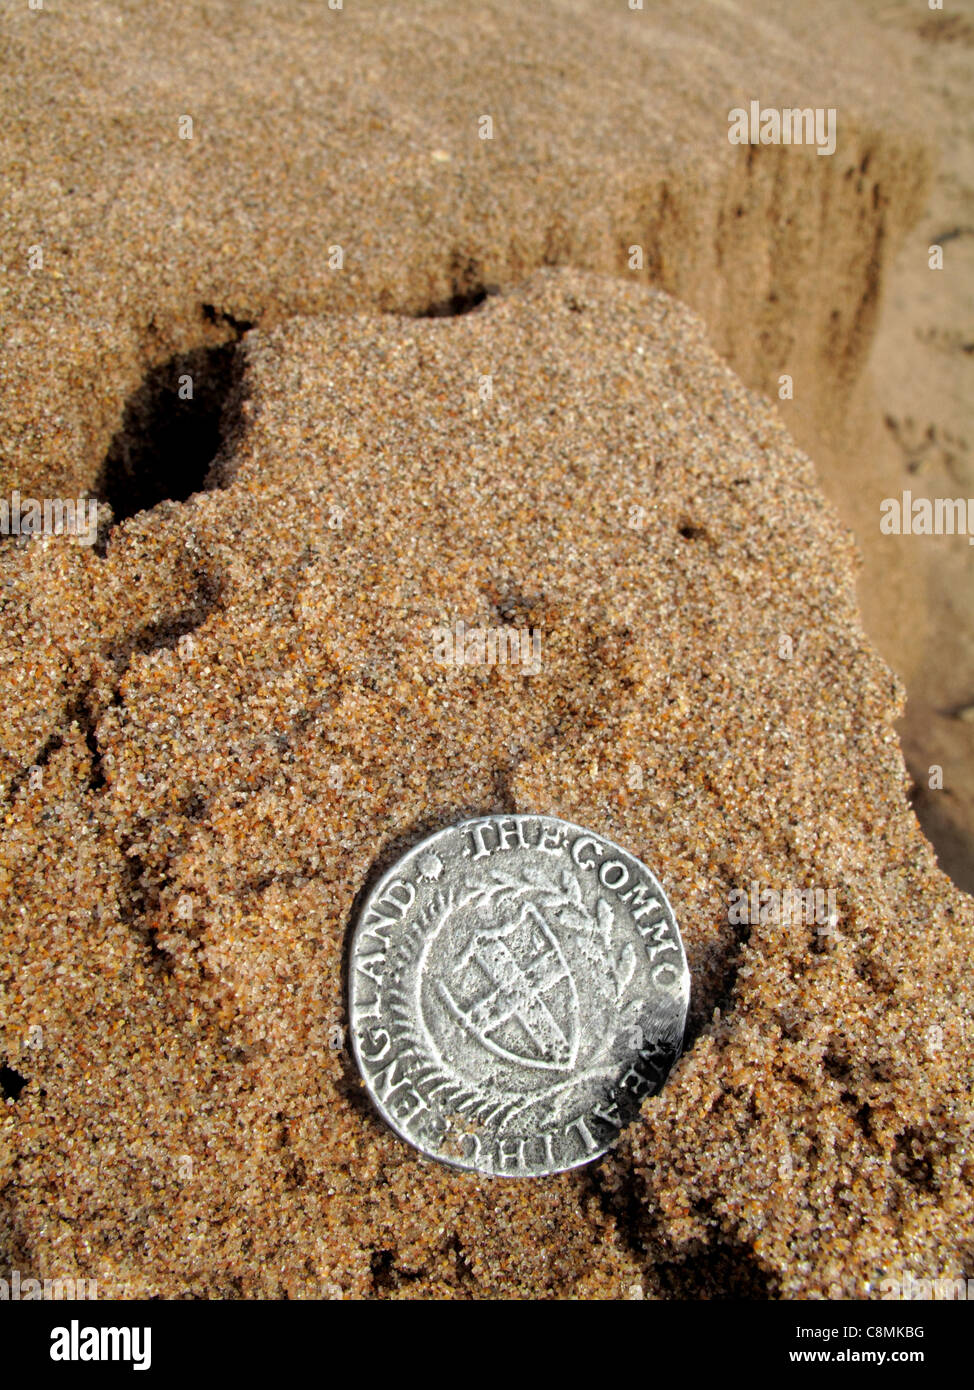 Un commonwealth chelín de plata de la época de Cromwell, descansa sobre la arena. Foto de stock